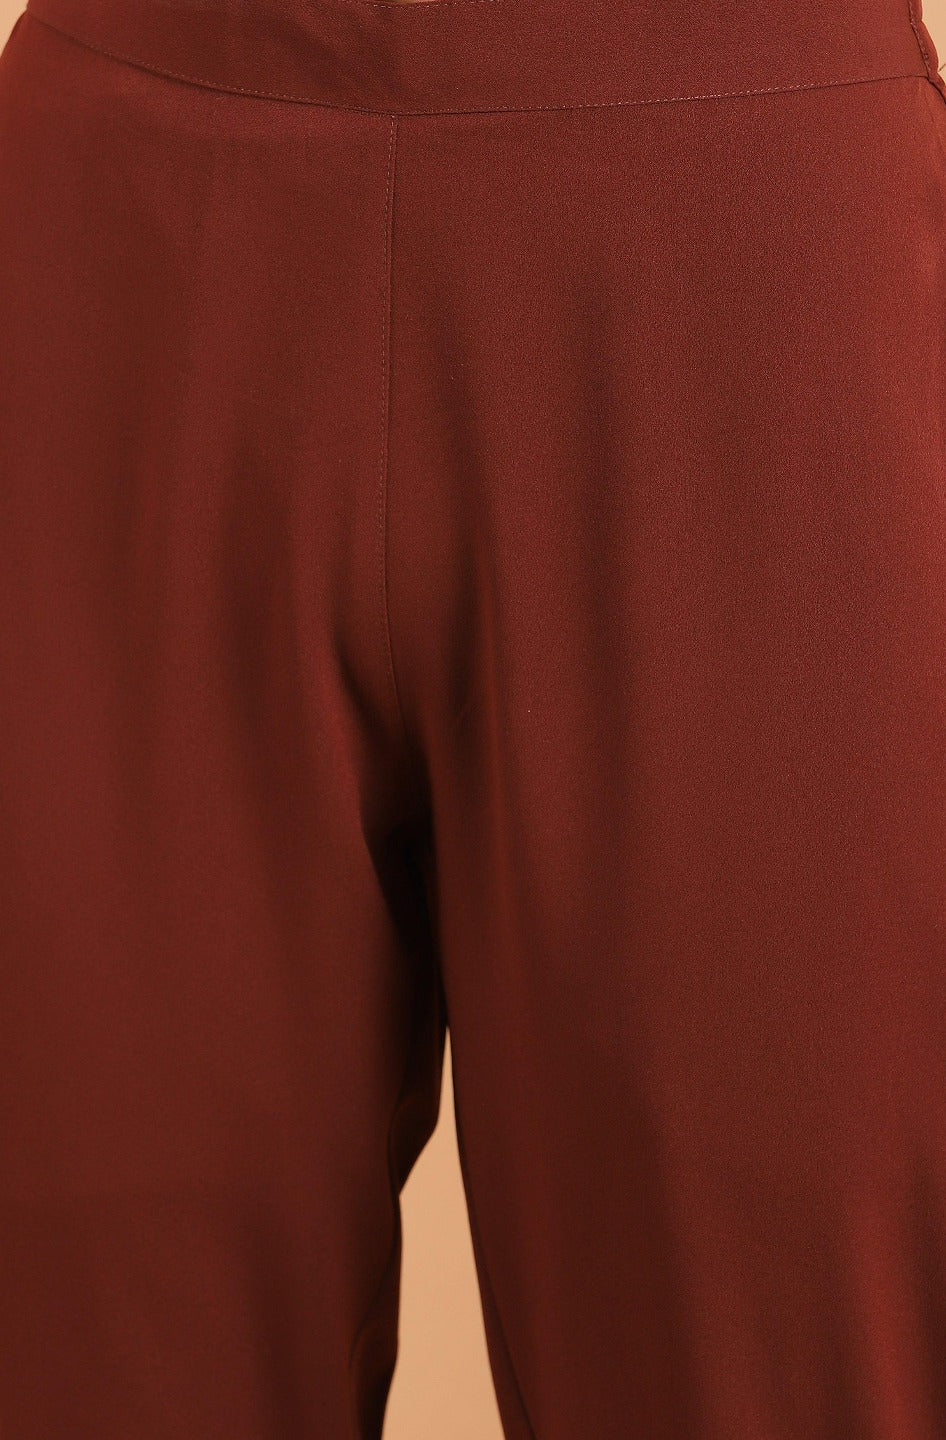 brown georgette top with pant set273-6